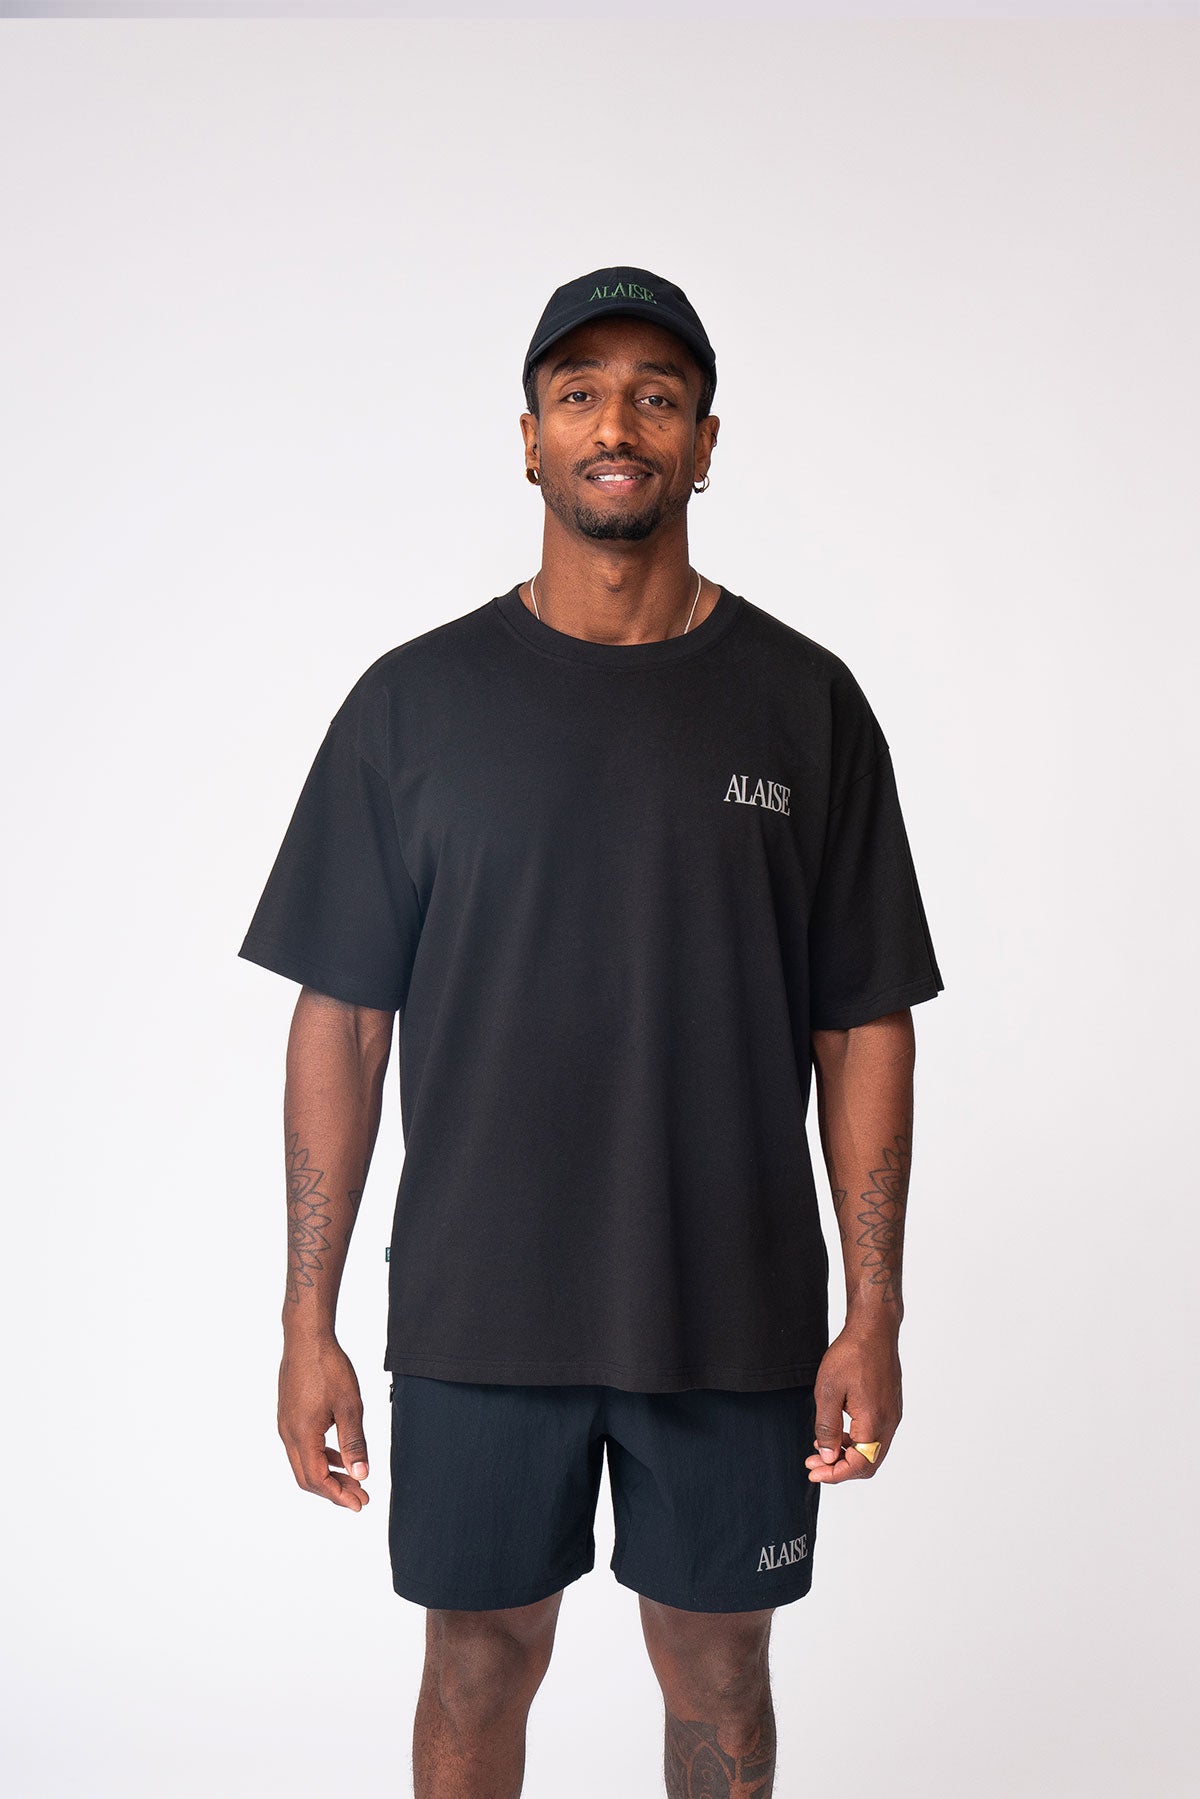 Alaise Graphic Box Fit T-Shirt - Black